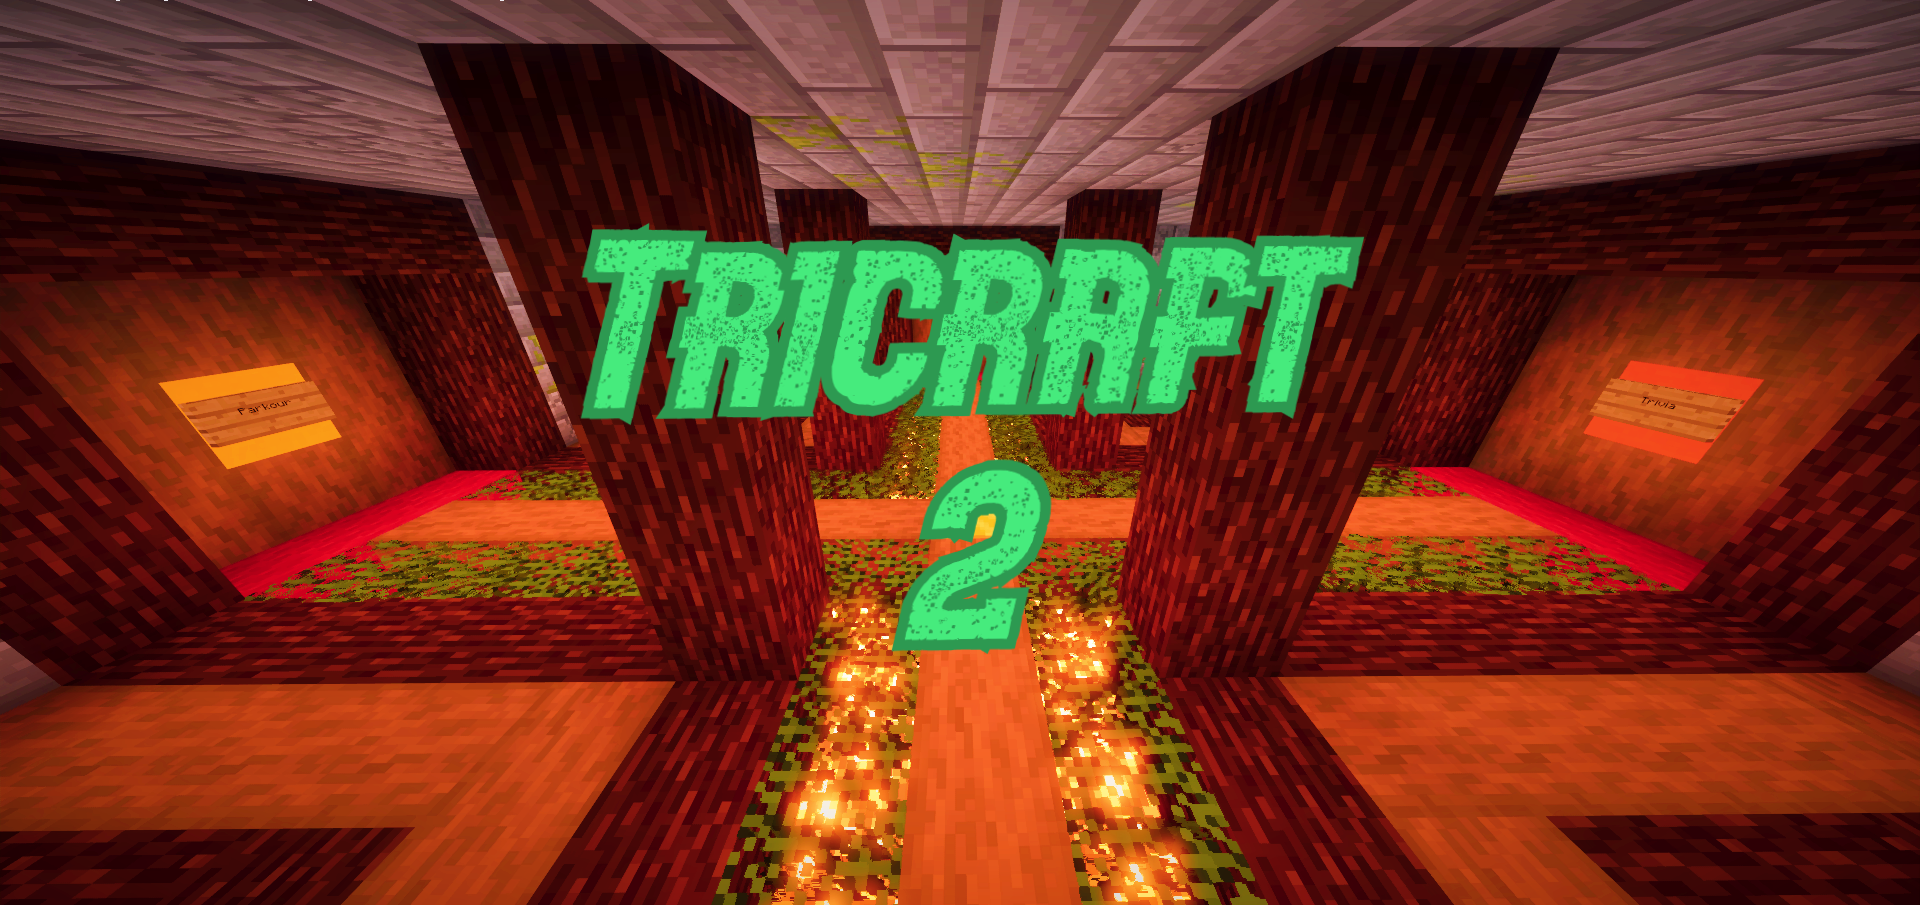 Baixar Tricraft 2 para Minecraft 1.15.2